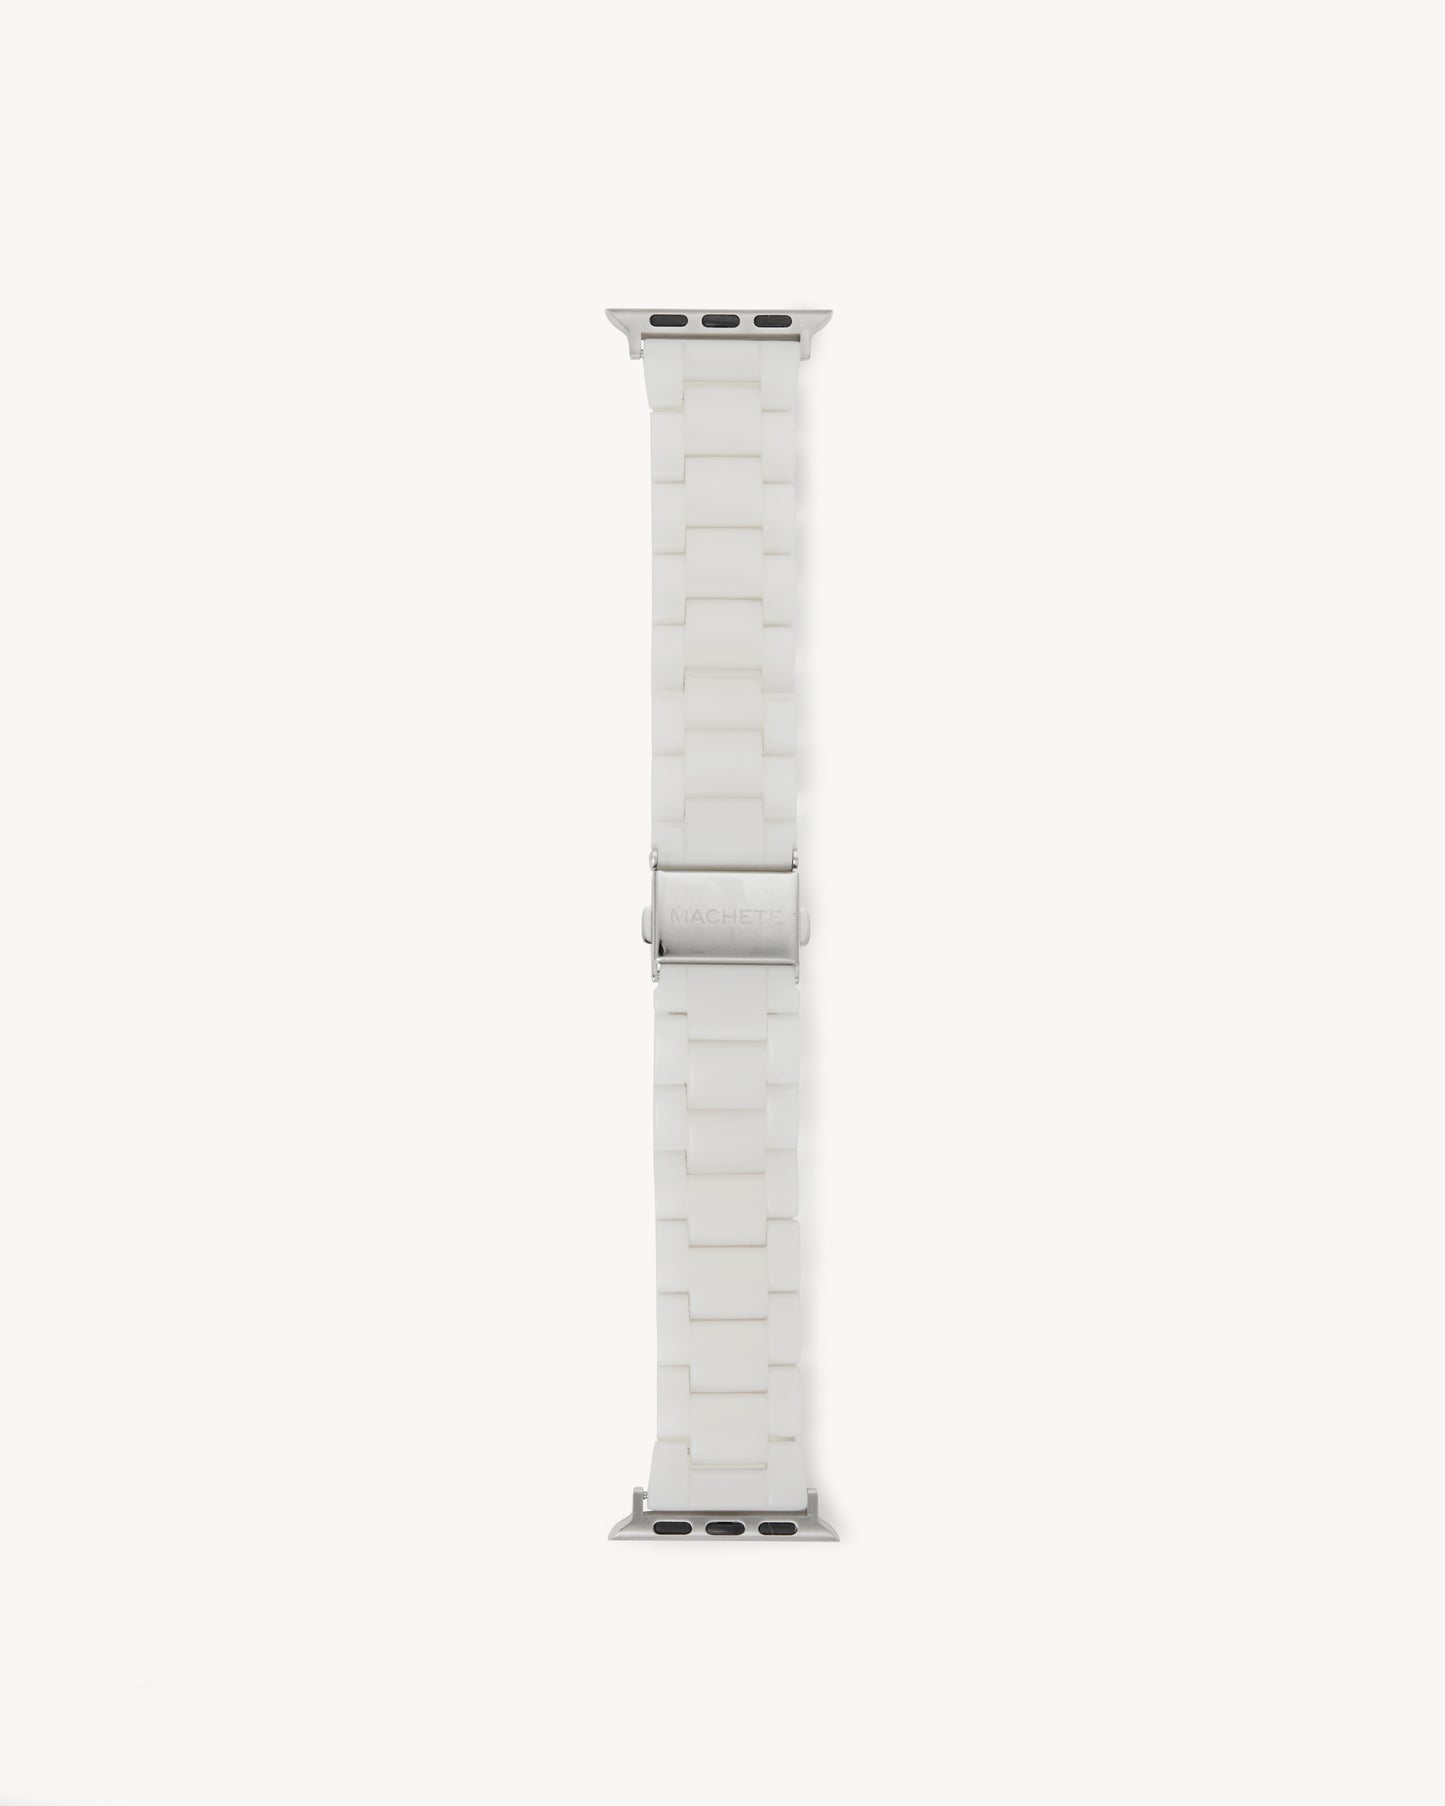 MACHETE Deluxe Apple Watch Band Set in White